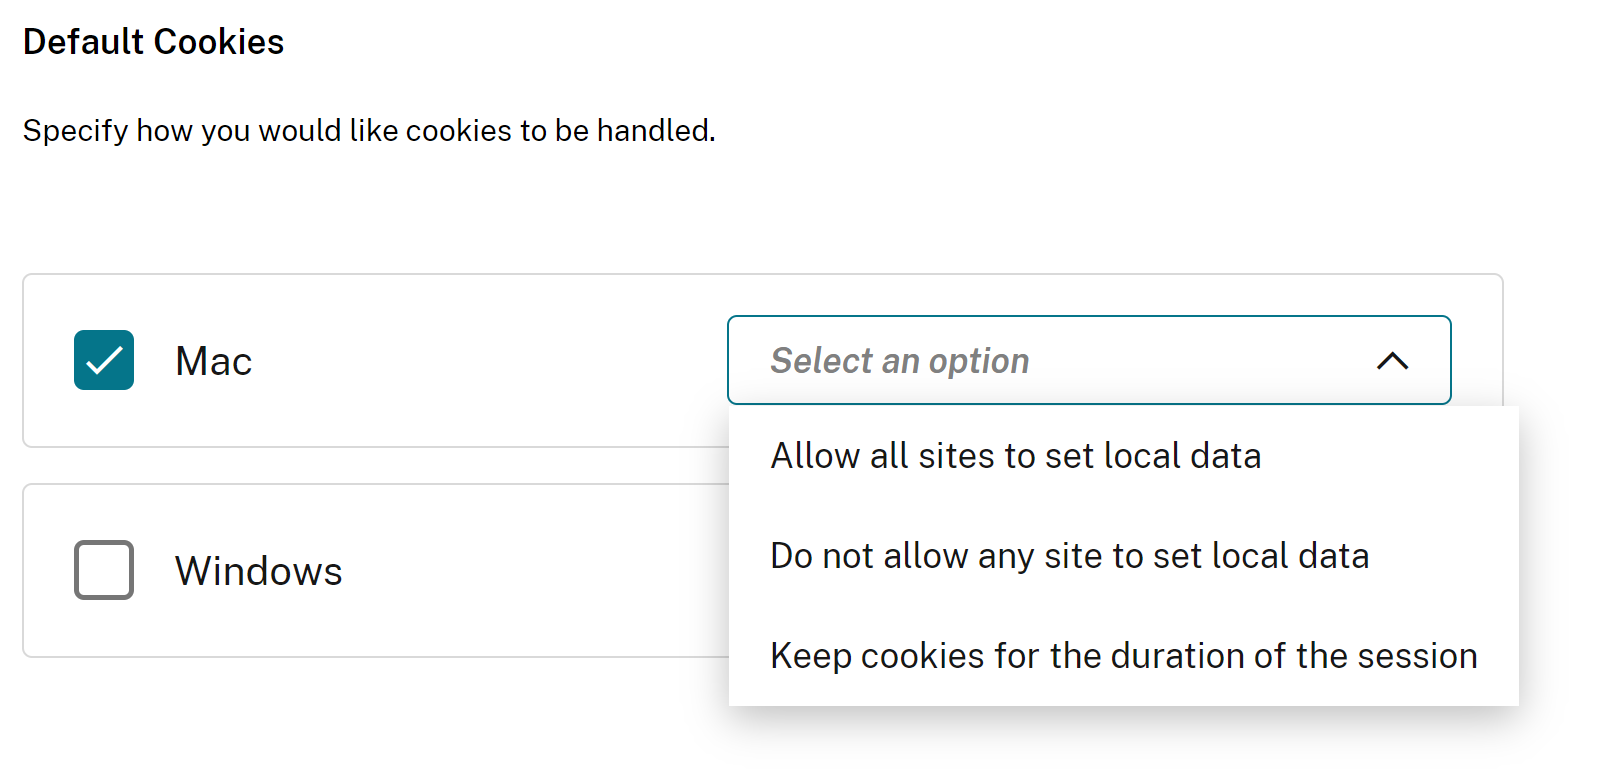 default cookies setting